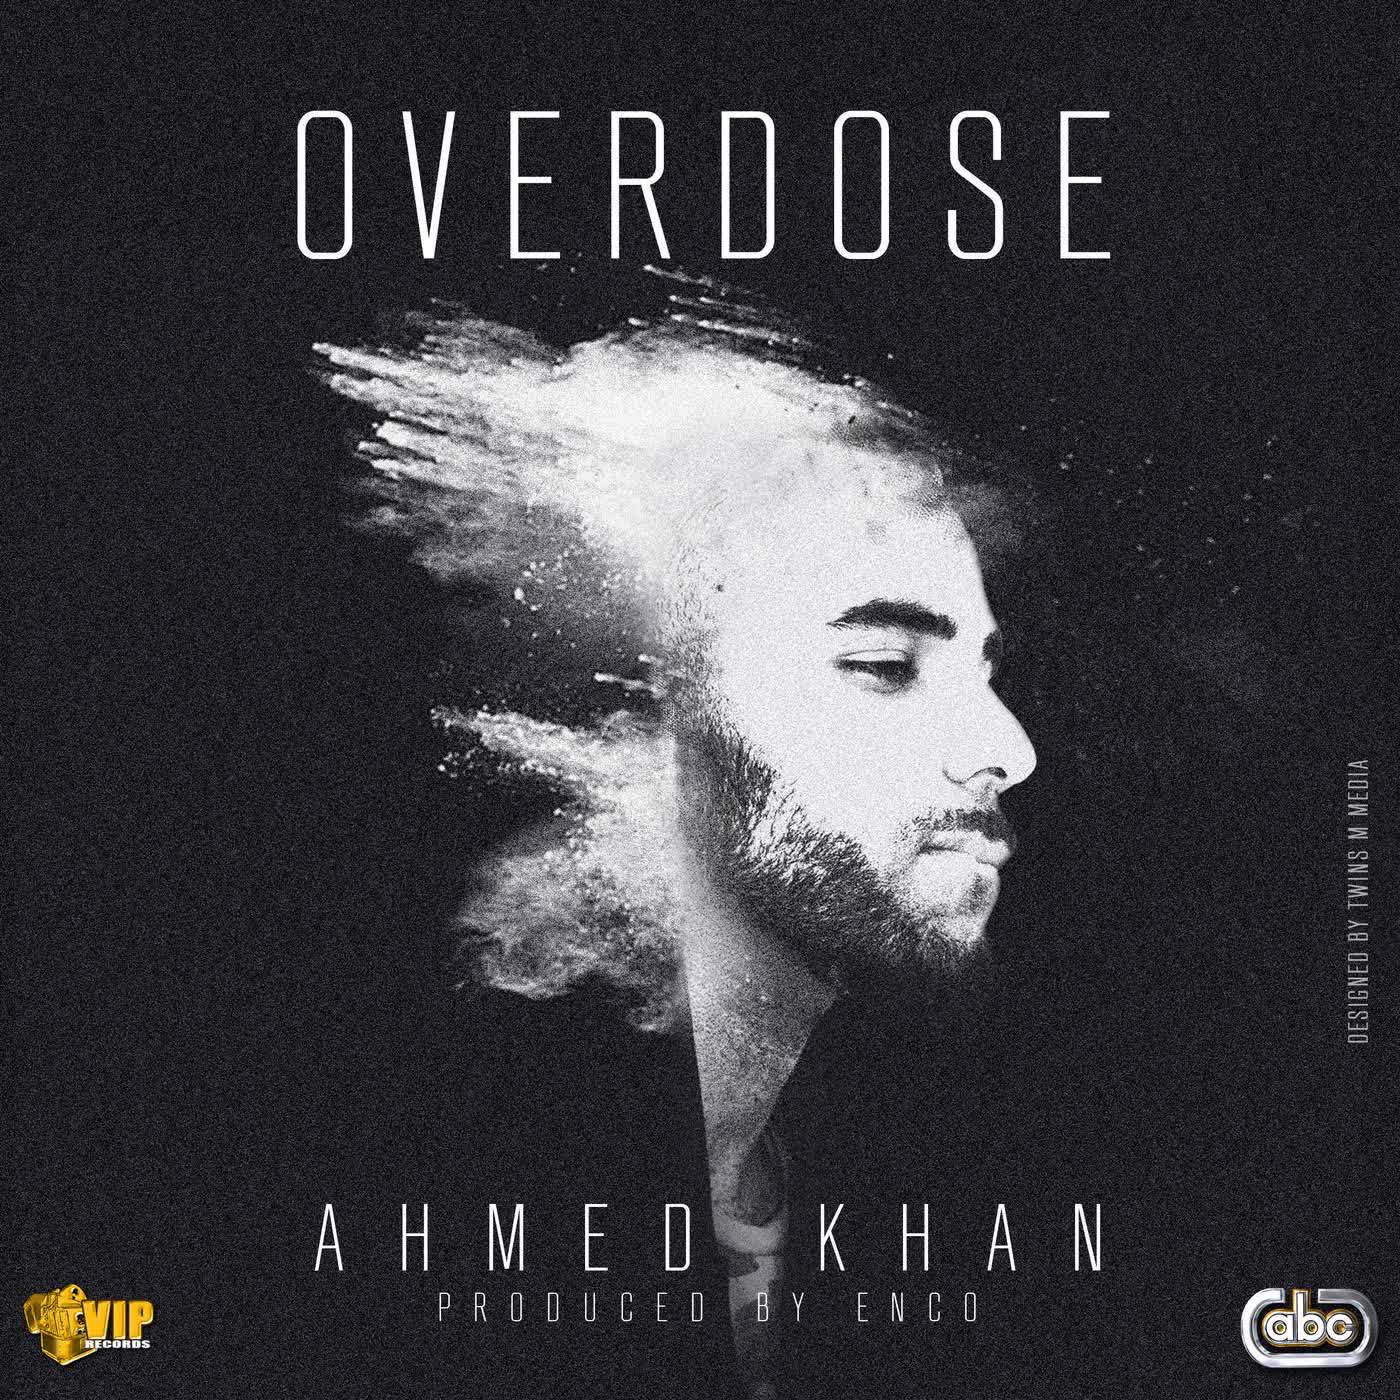 Overdose Ahmed Khan Mp3 Song